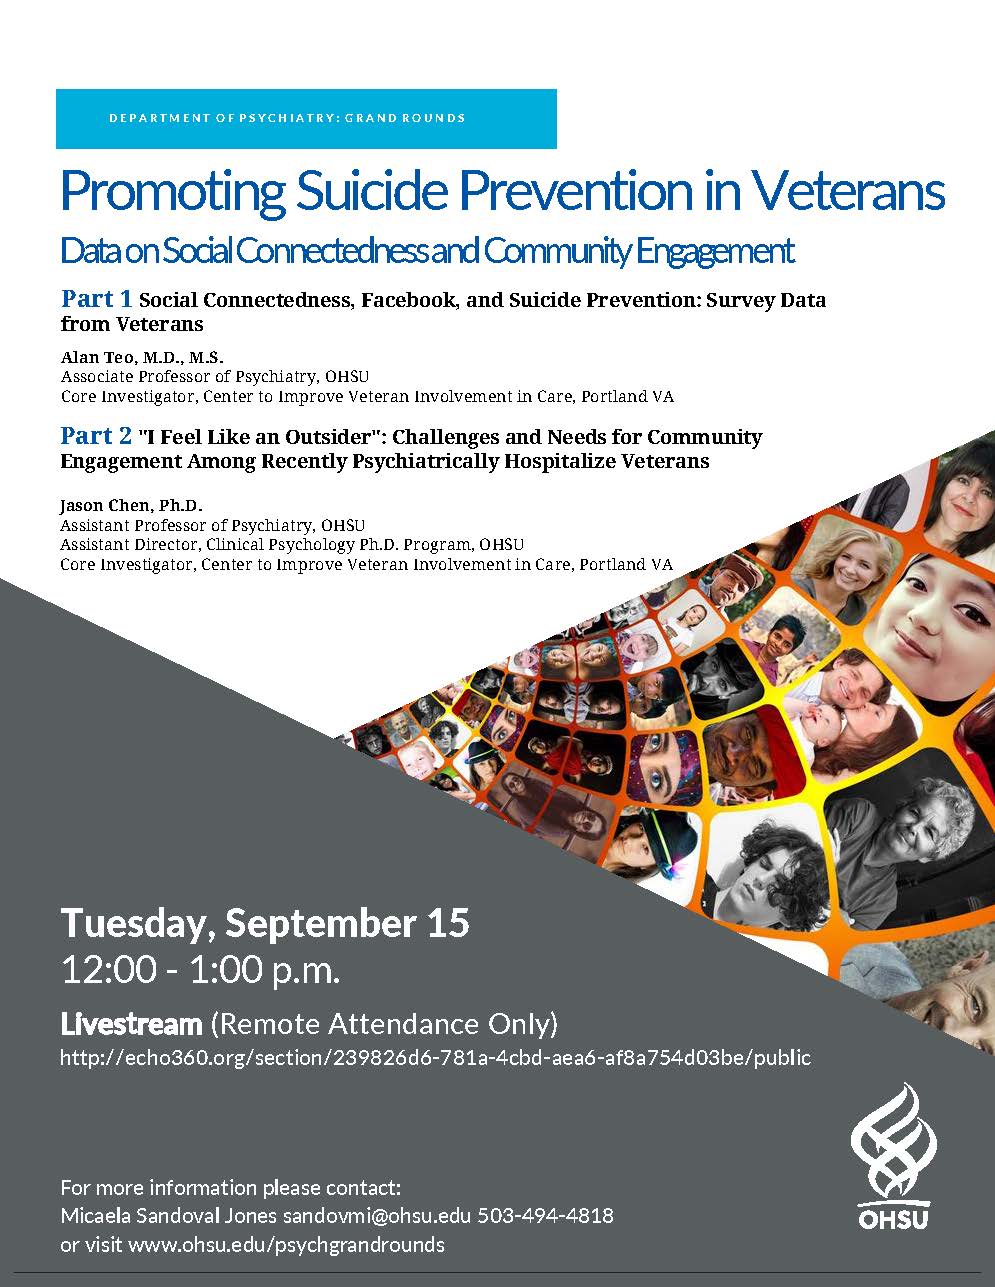 Suicide Prevention in Veterans 2020 Alan Teo Jason Chen